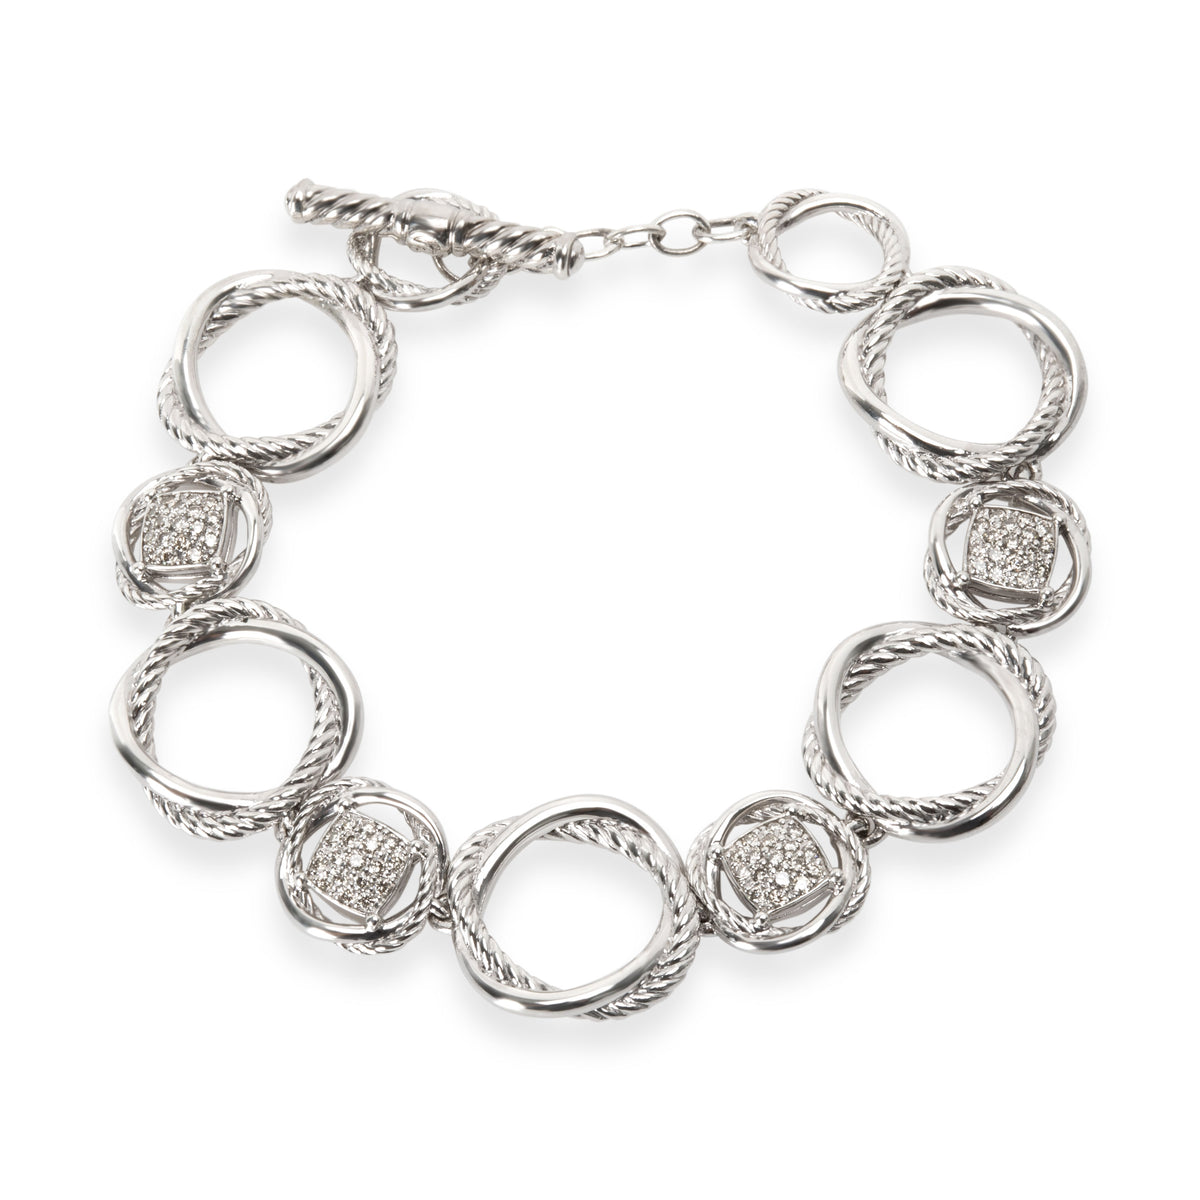 David Yurman Infinity Diamond Toggle Bracelet in Sterling Silver 0.8 CTW